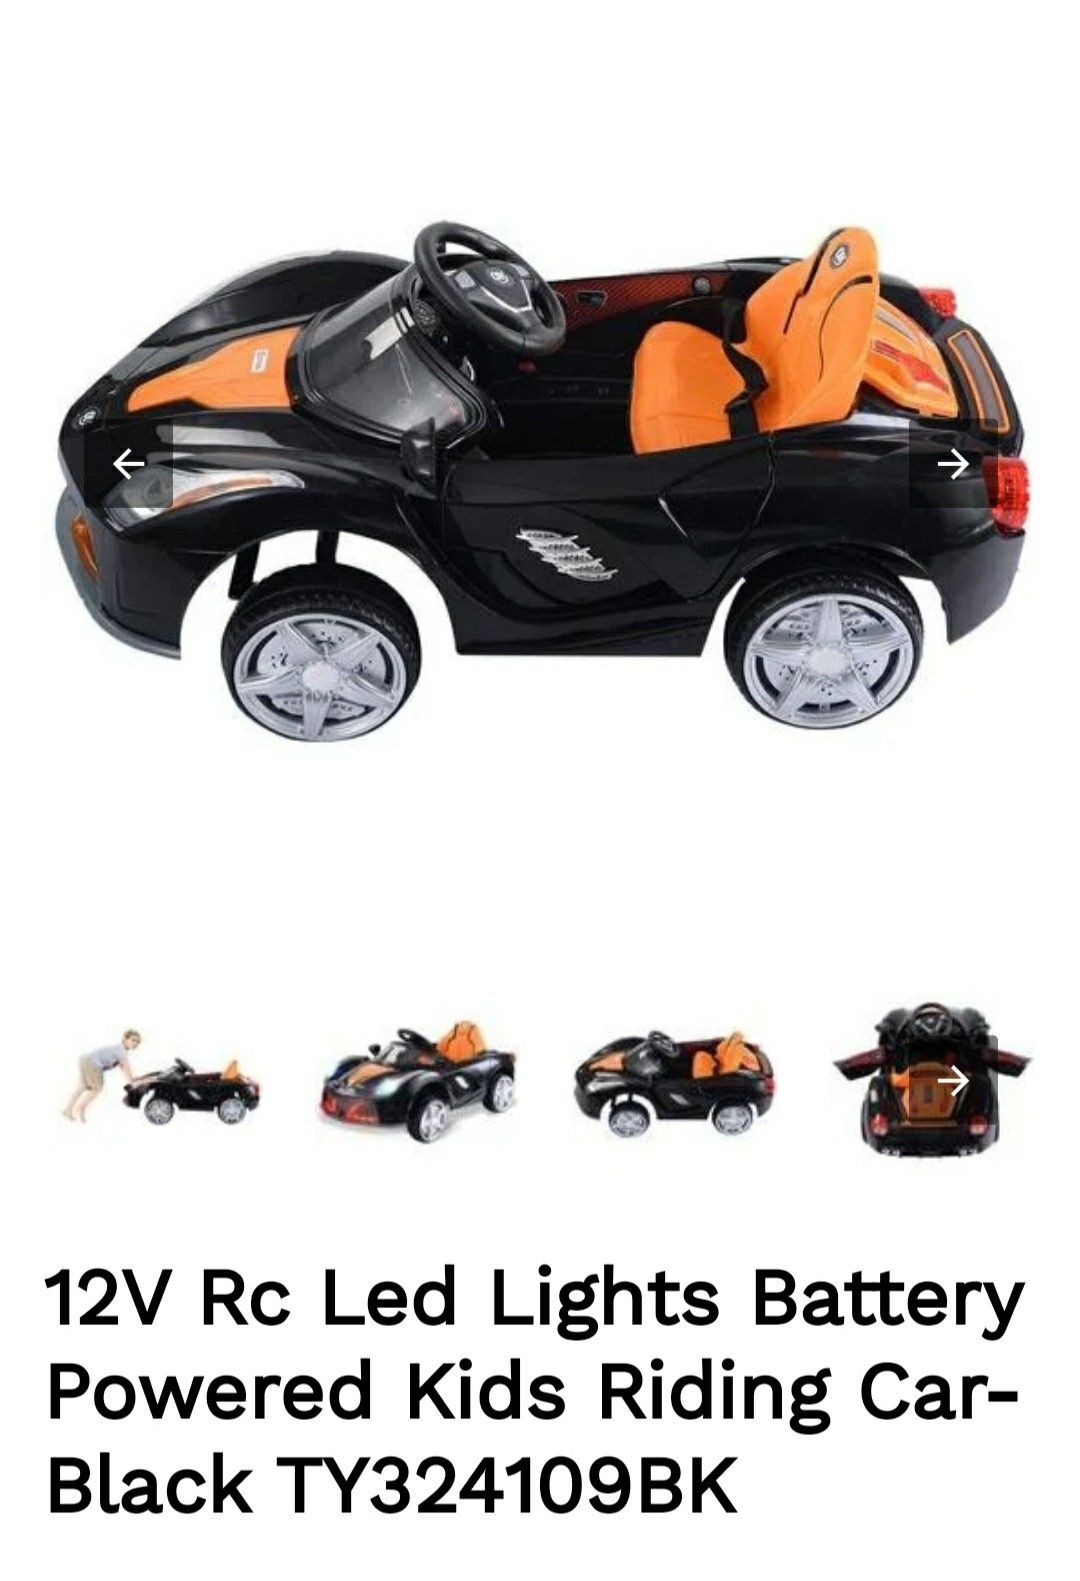 12V Rc Led Lights Battery Powered Kids Riding Car-Black